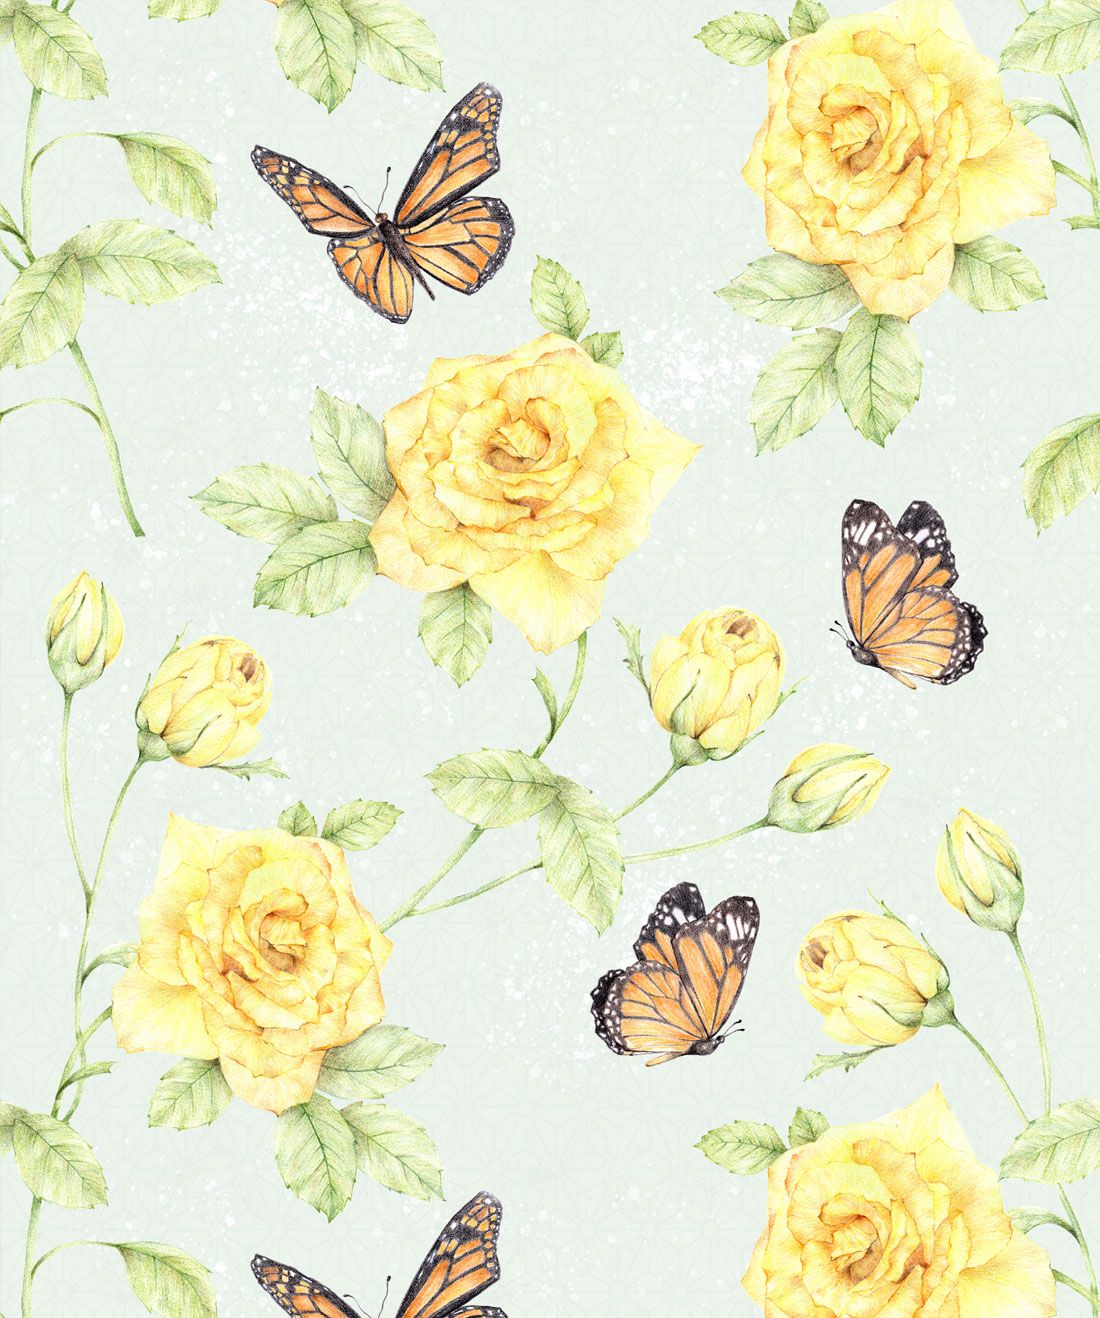 Roses & Butterflies is a floral wallpaper